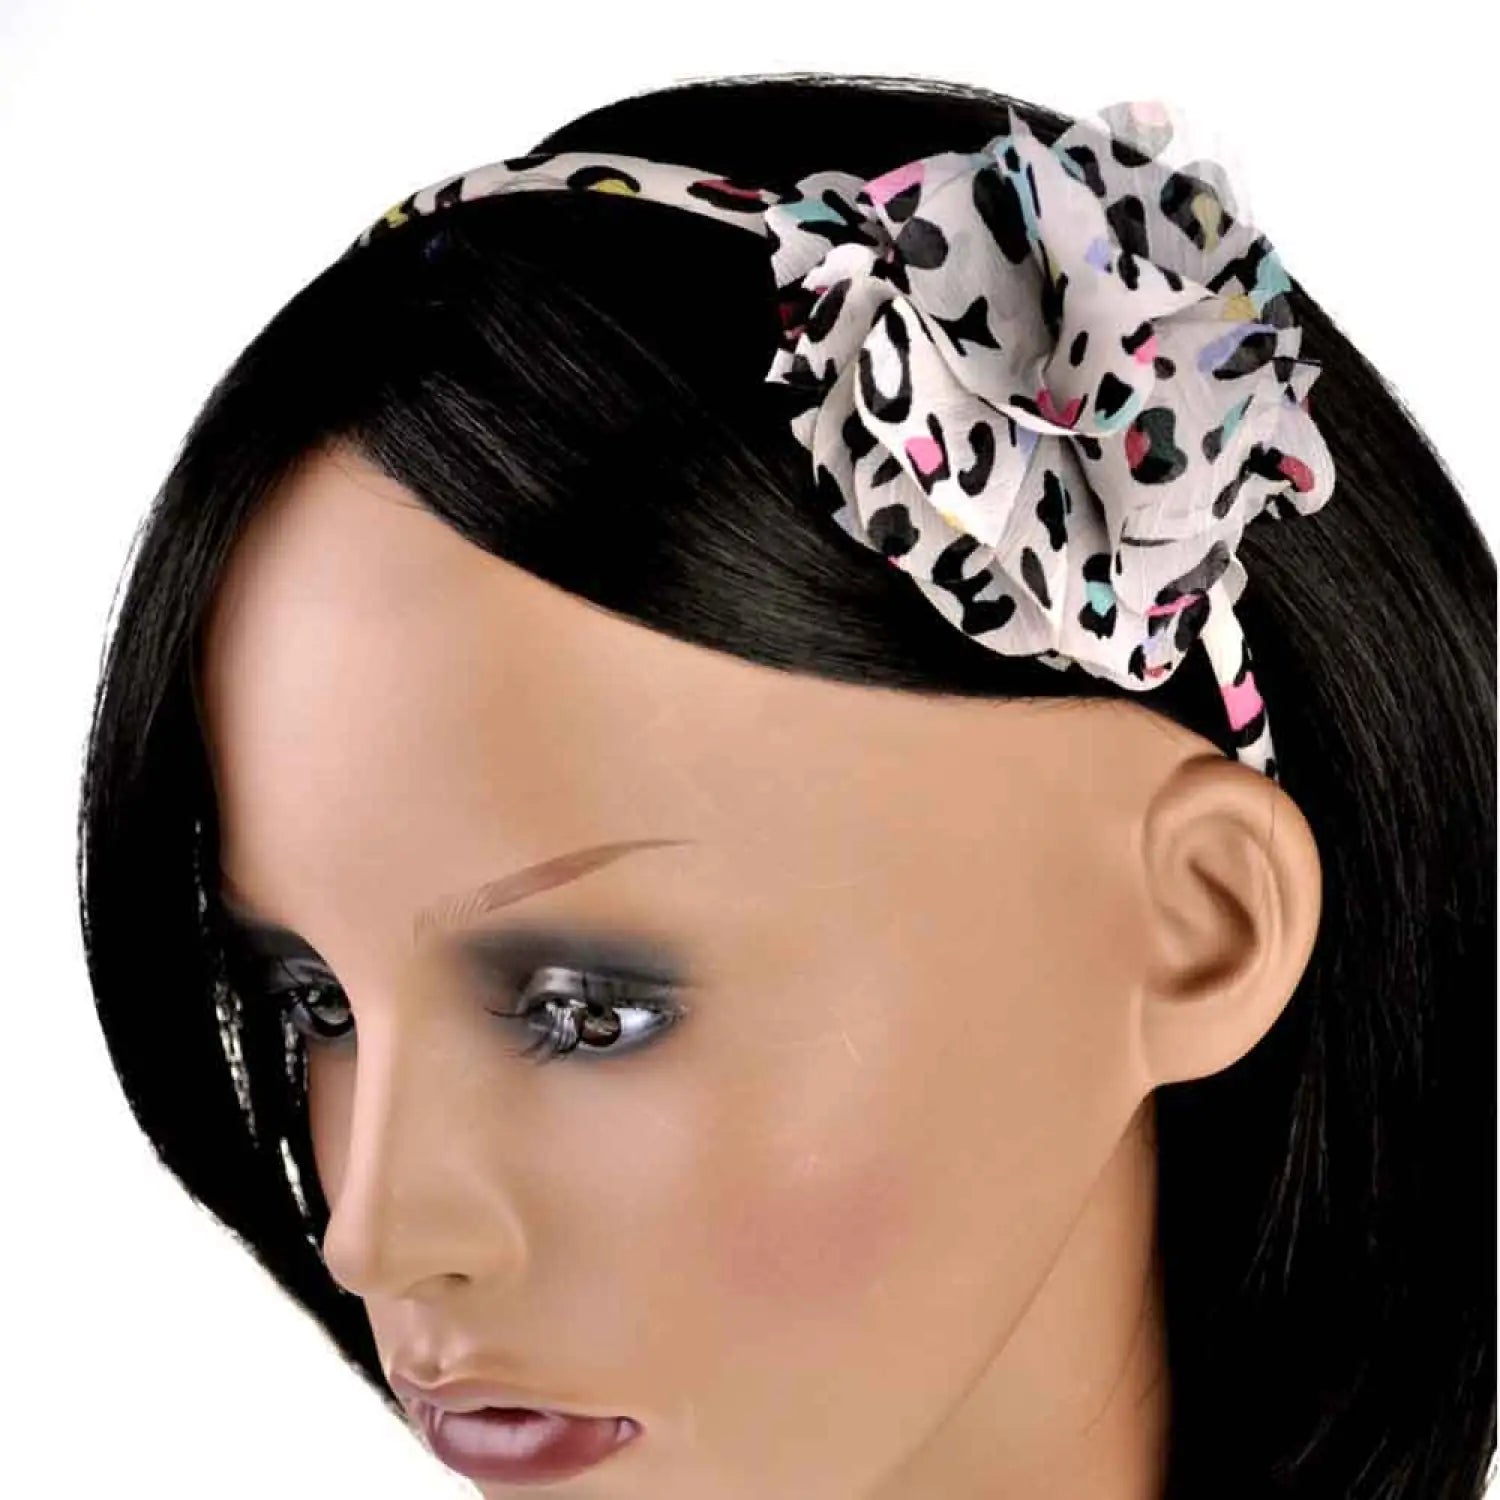 Kids’ Chiffon 3D Flower Leopard Print Headband with woman wearing floral headband